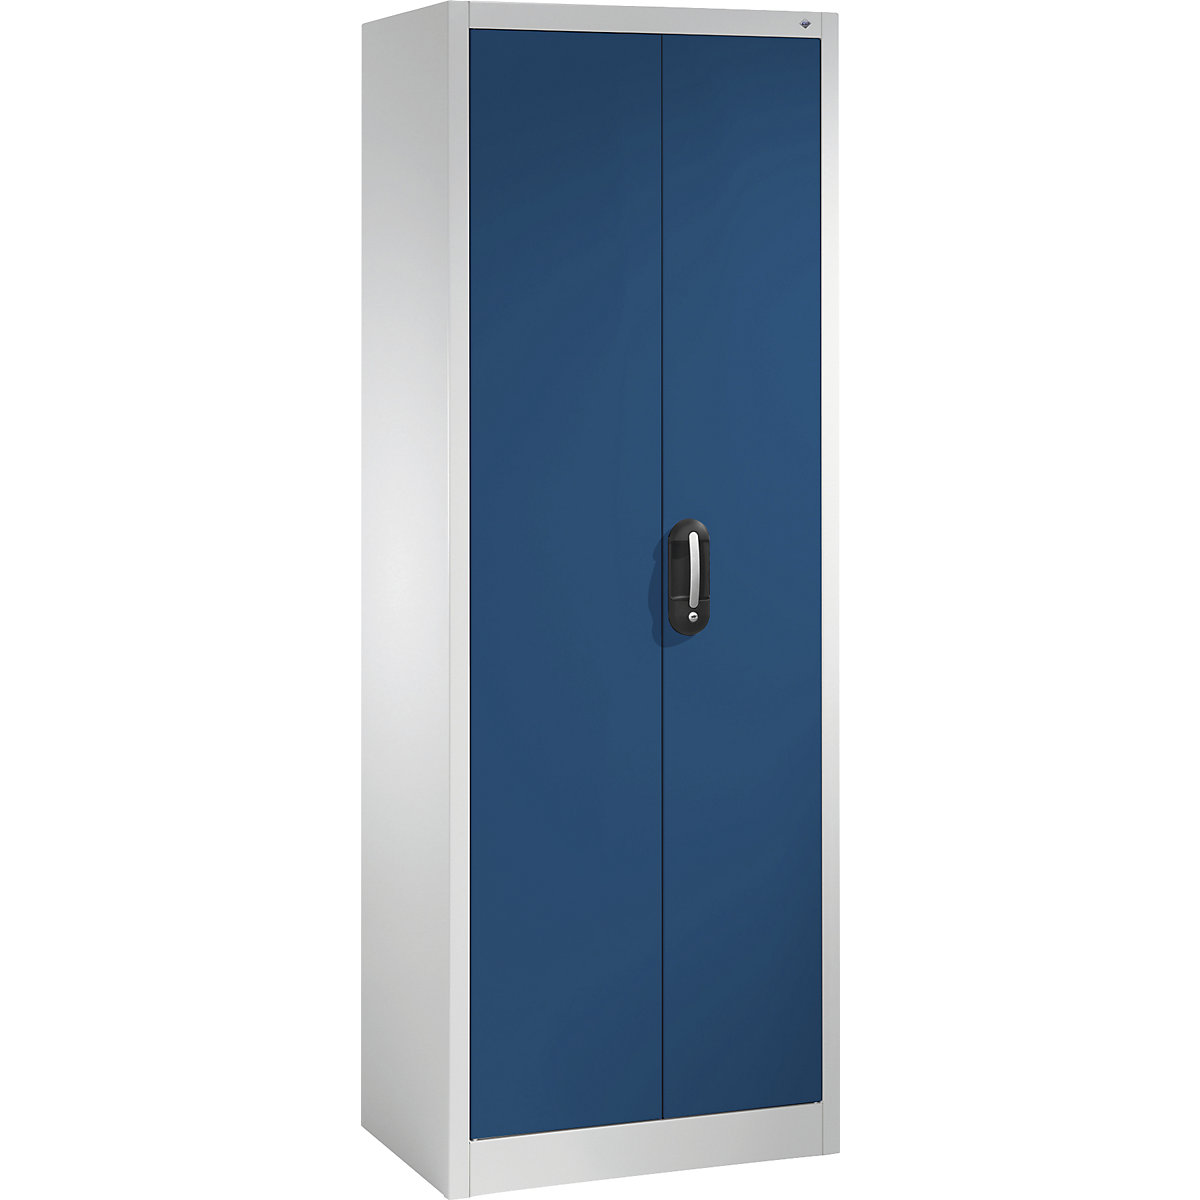 ACURADO universal cupboard – C+P, WxD 700 x 400 mm, light grey / gentian blue-28